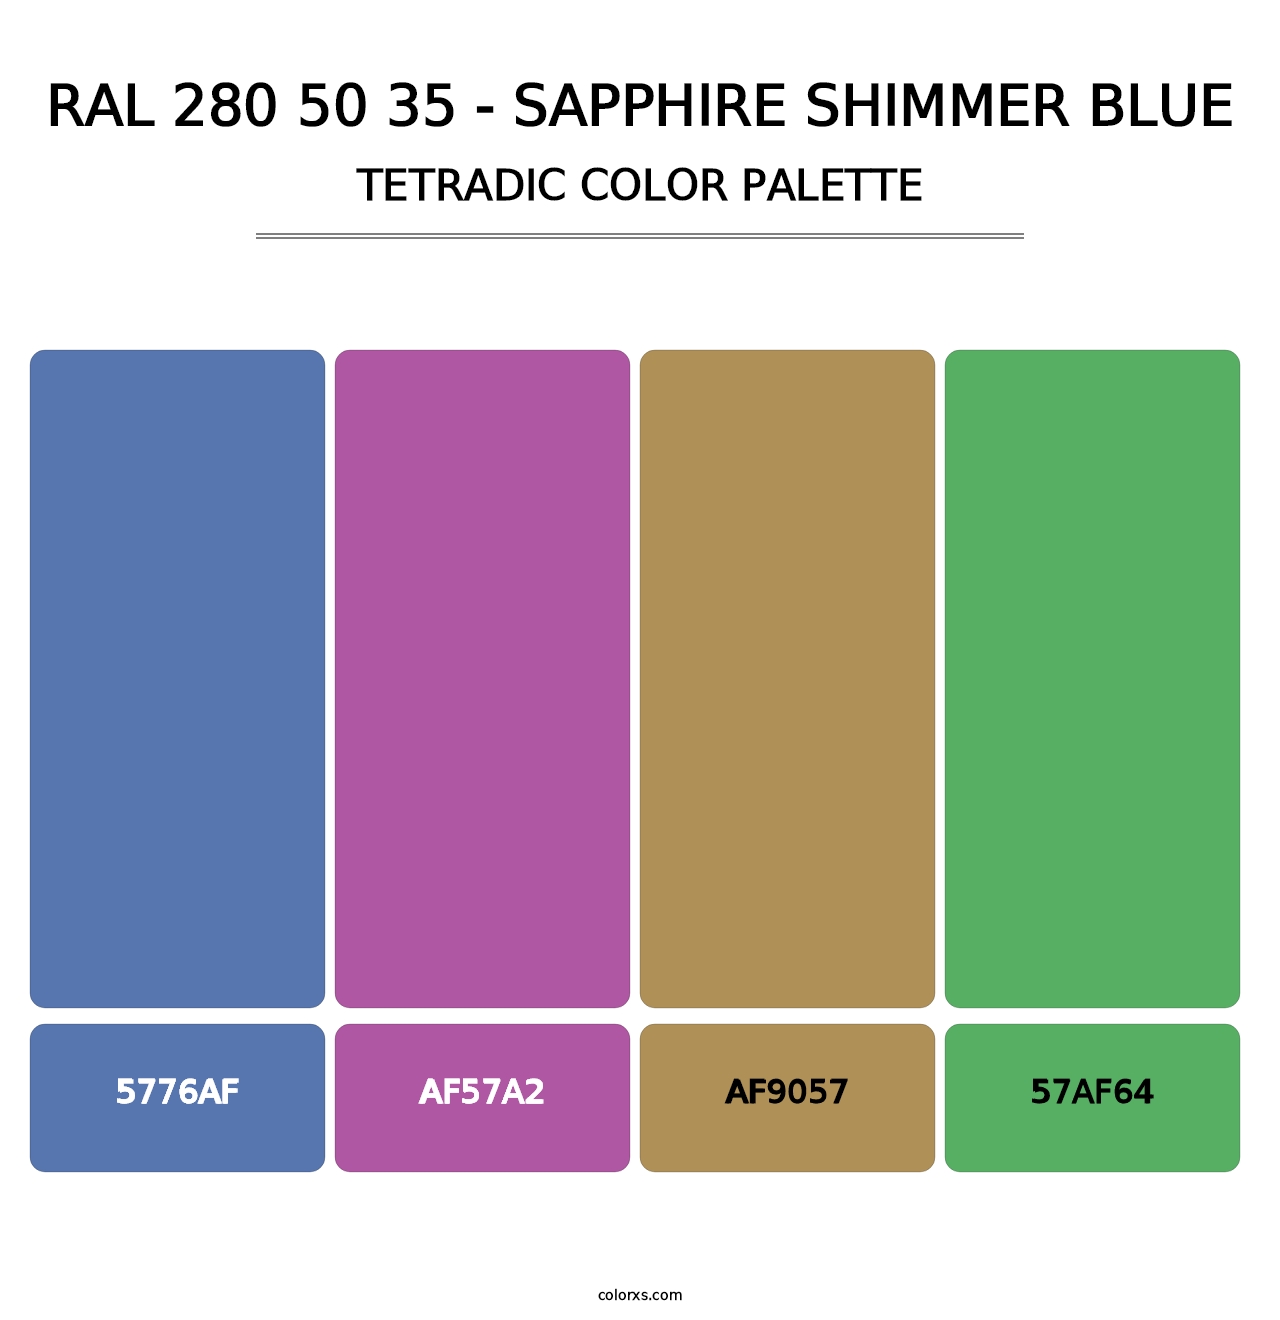 RAL 280 50 35 - Sapphire Shimmer Blue - Tetradic Color Palette